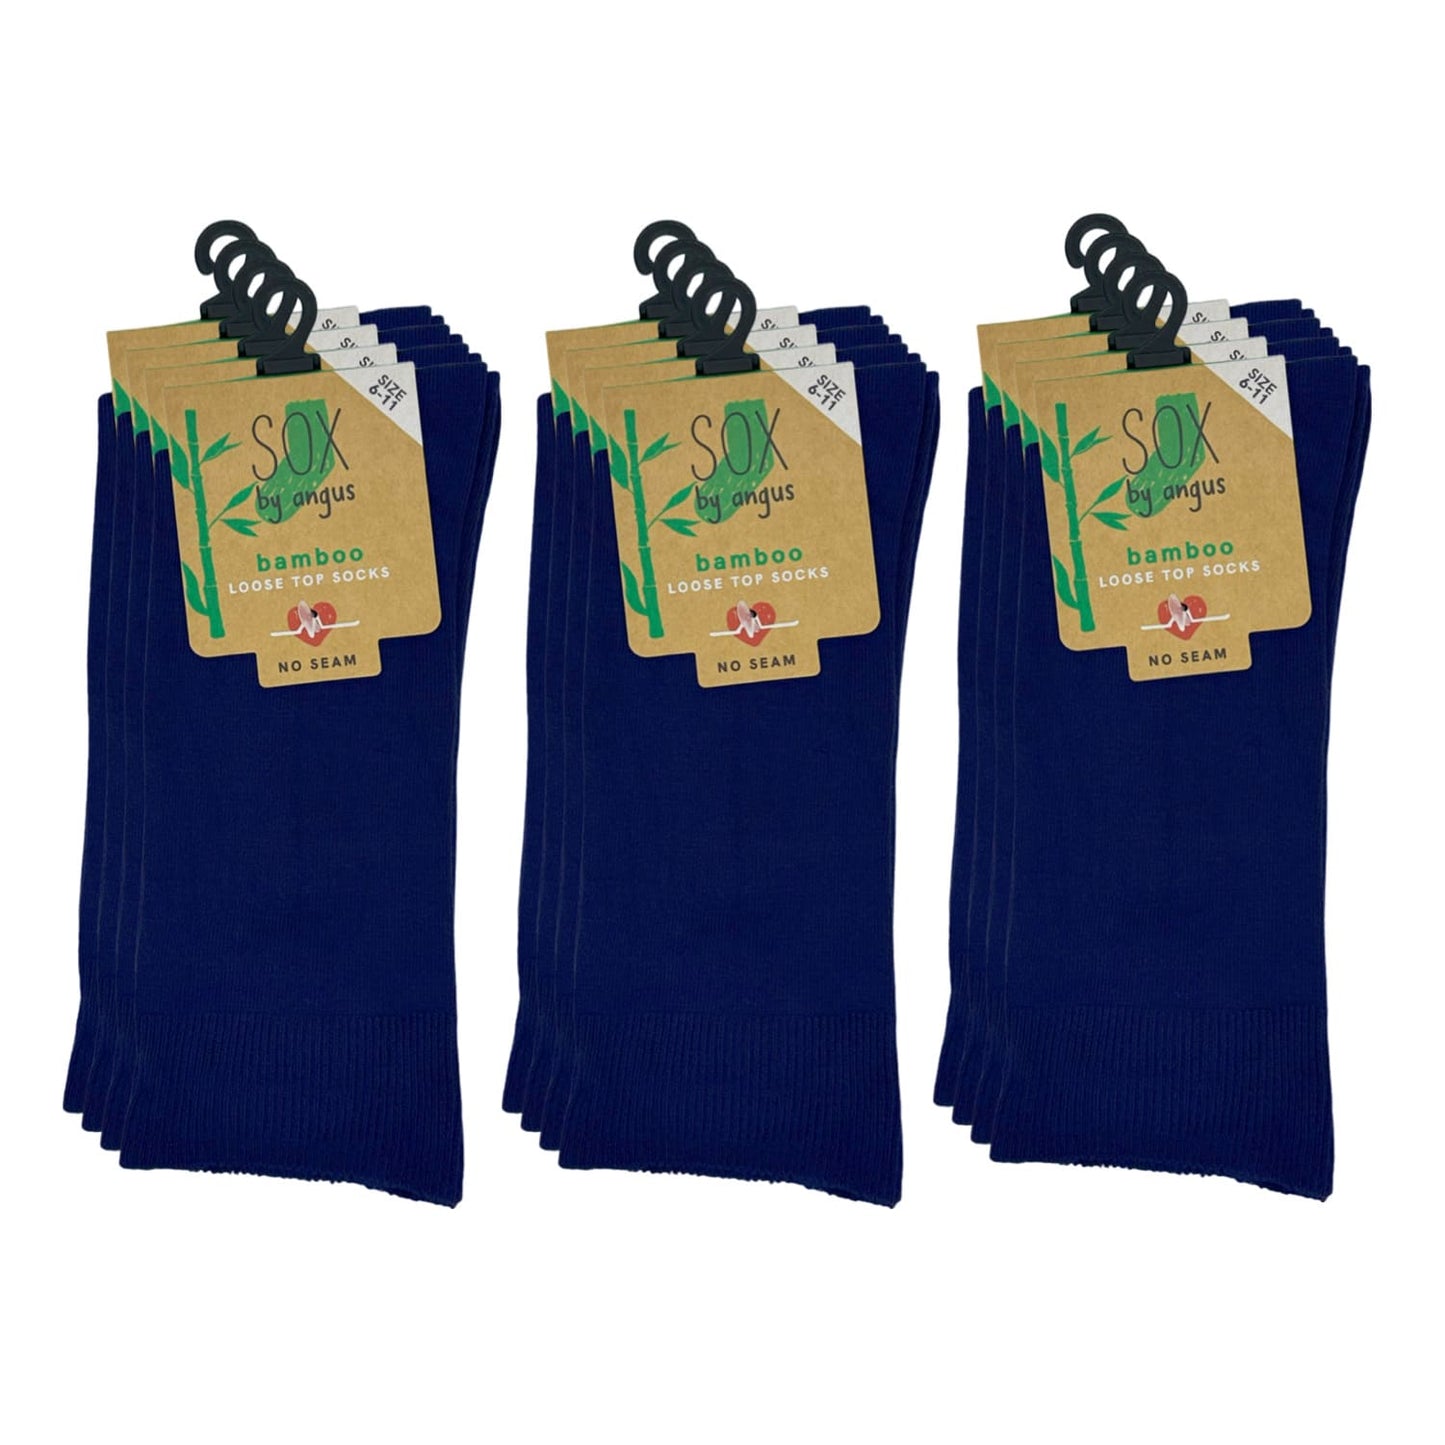 Bamboo Plain Loose Top Socks - NO SEAM – Navy Blue